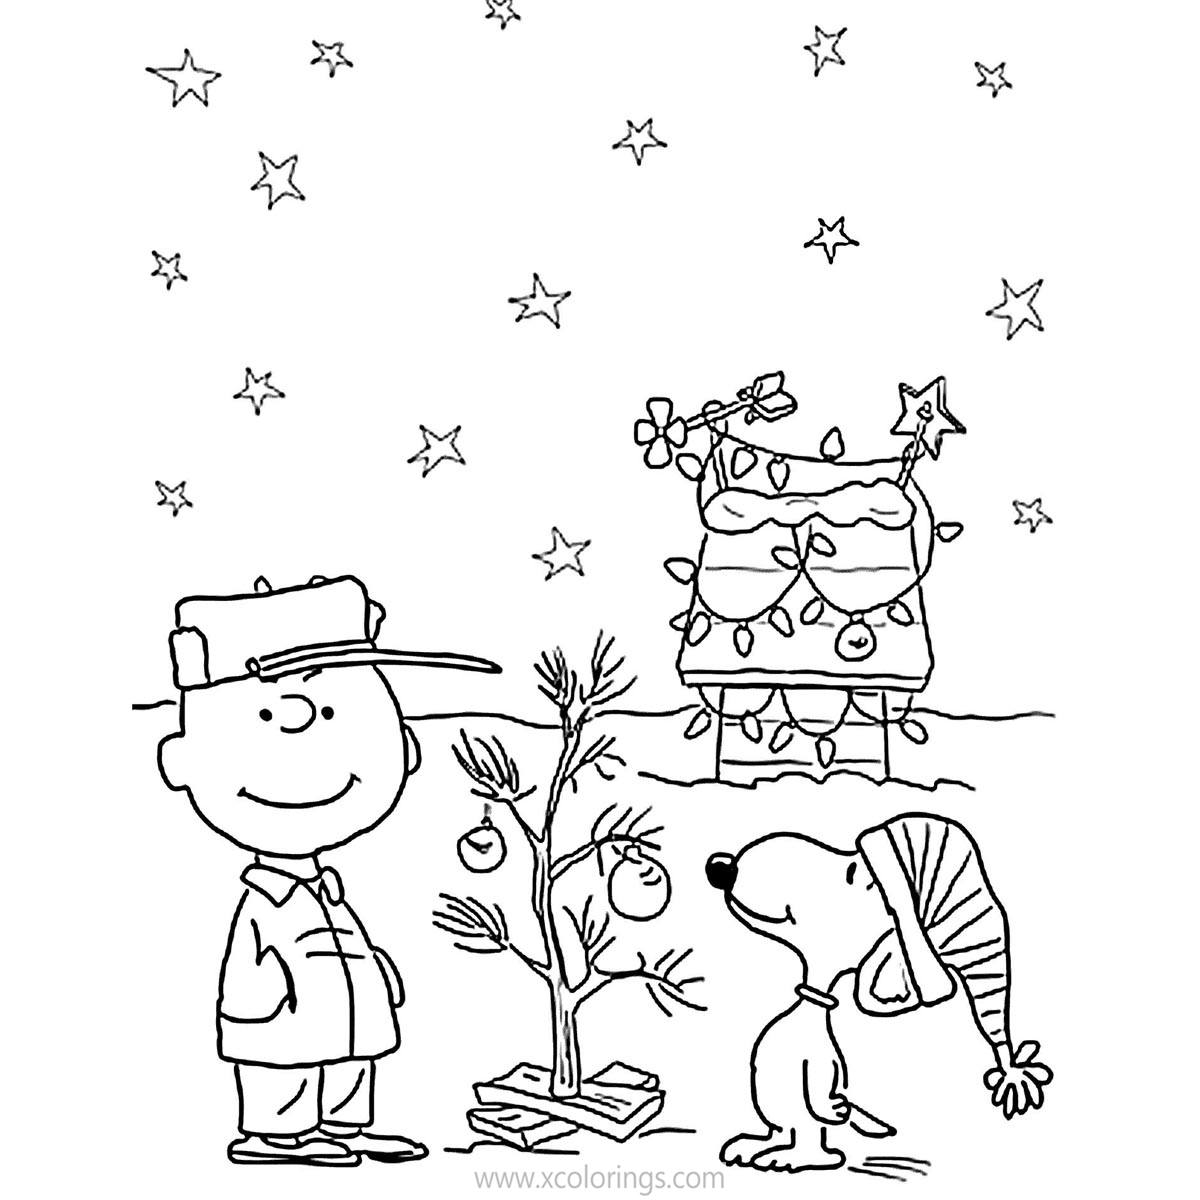 Free Charlie Brown Christmas Coloring Pages A Small Christmas Tree printable